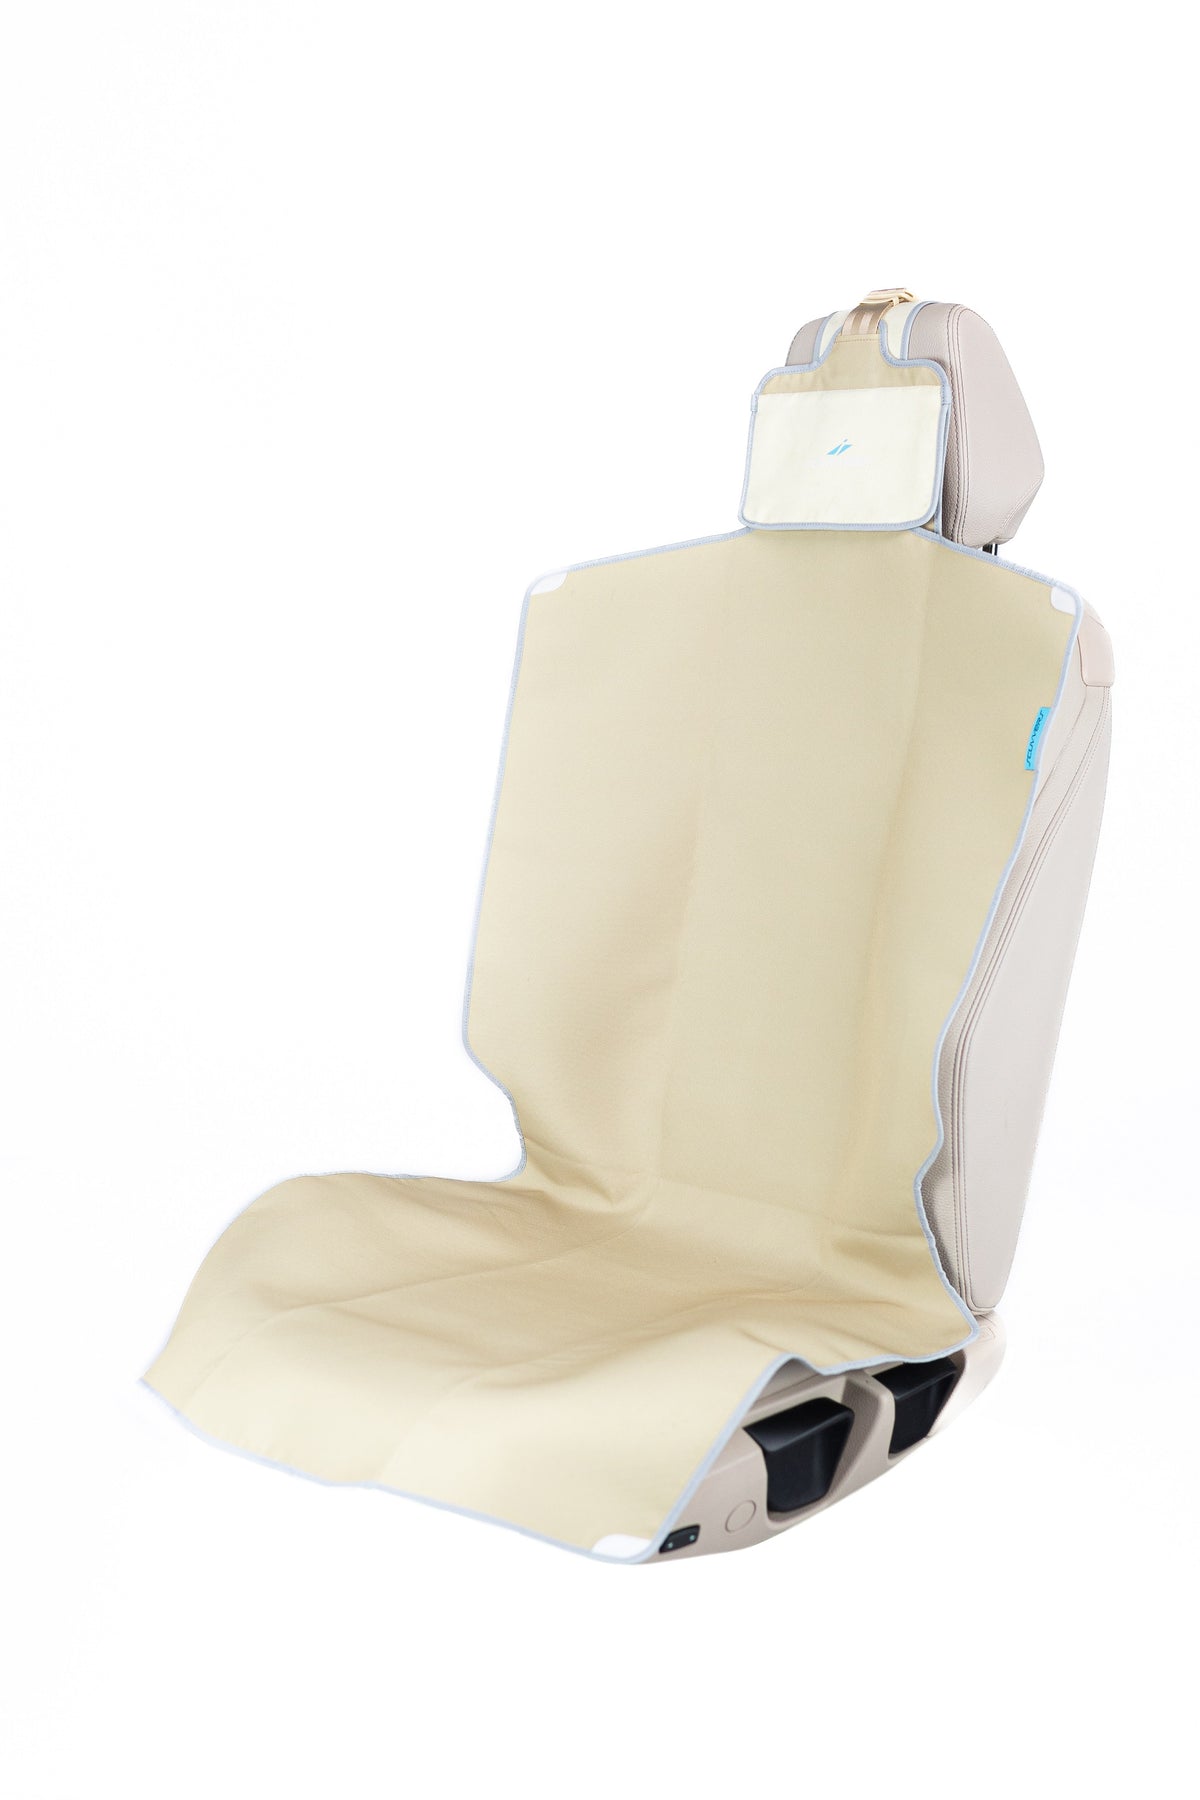 Scuvvers - Stowable car seat protectors. by Scuvvers — Kickstarter